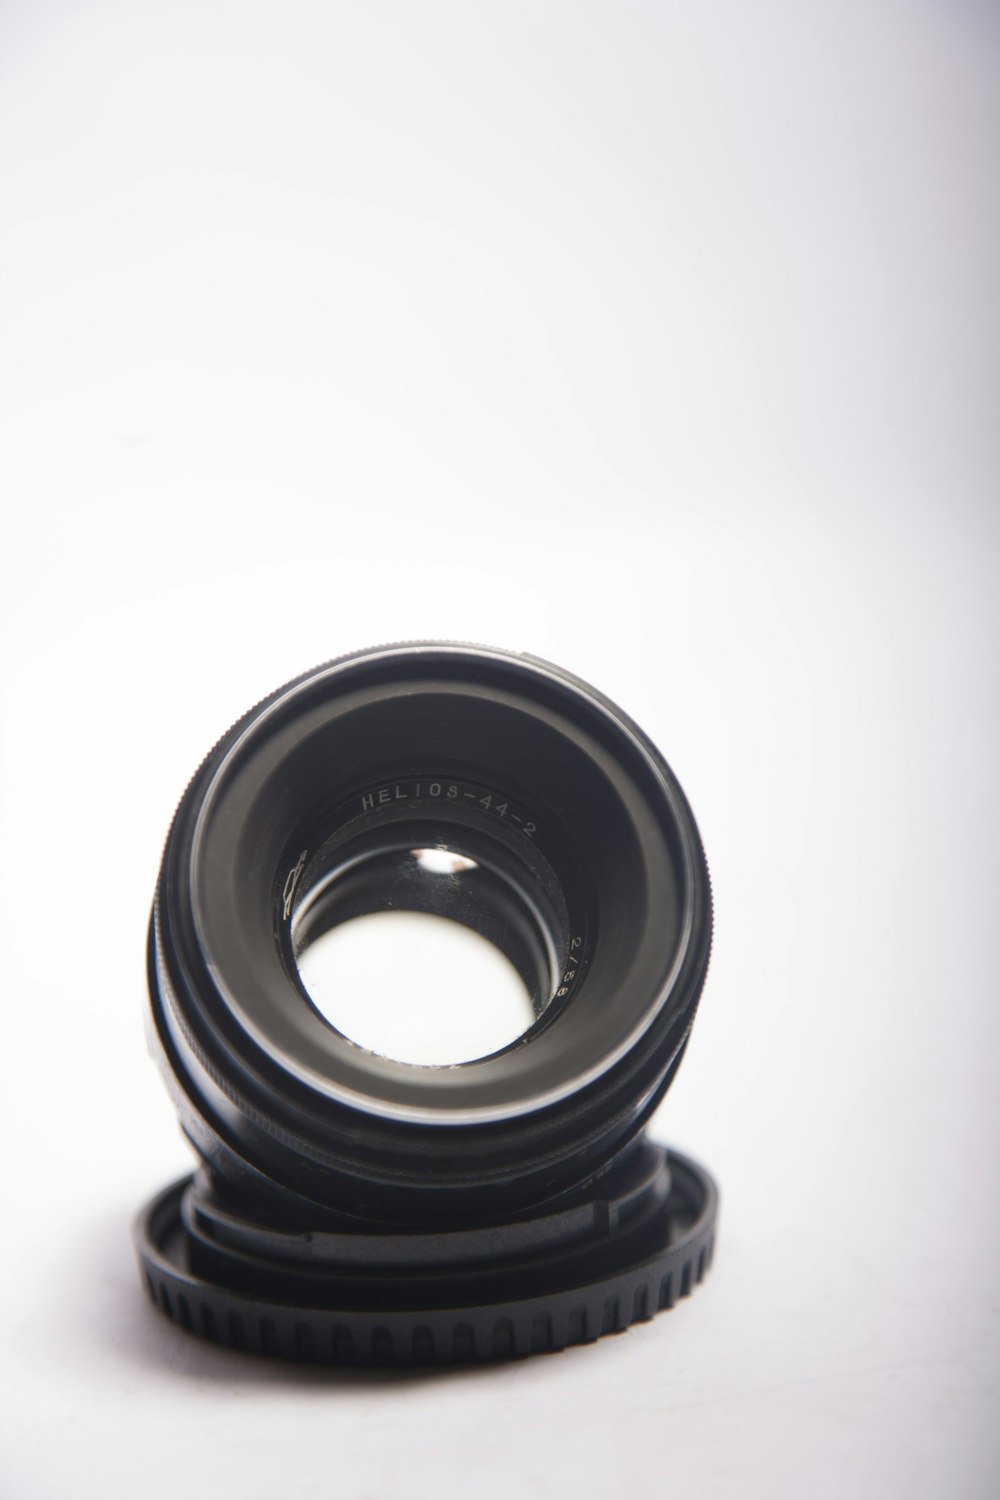 black camera lens on white surface